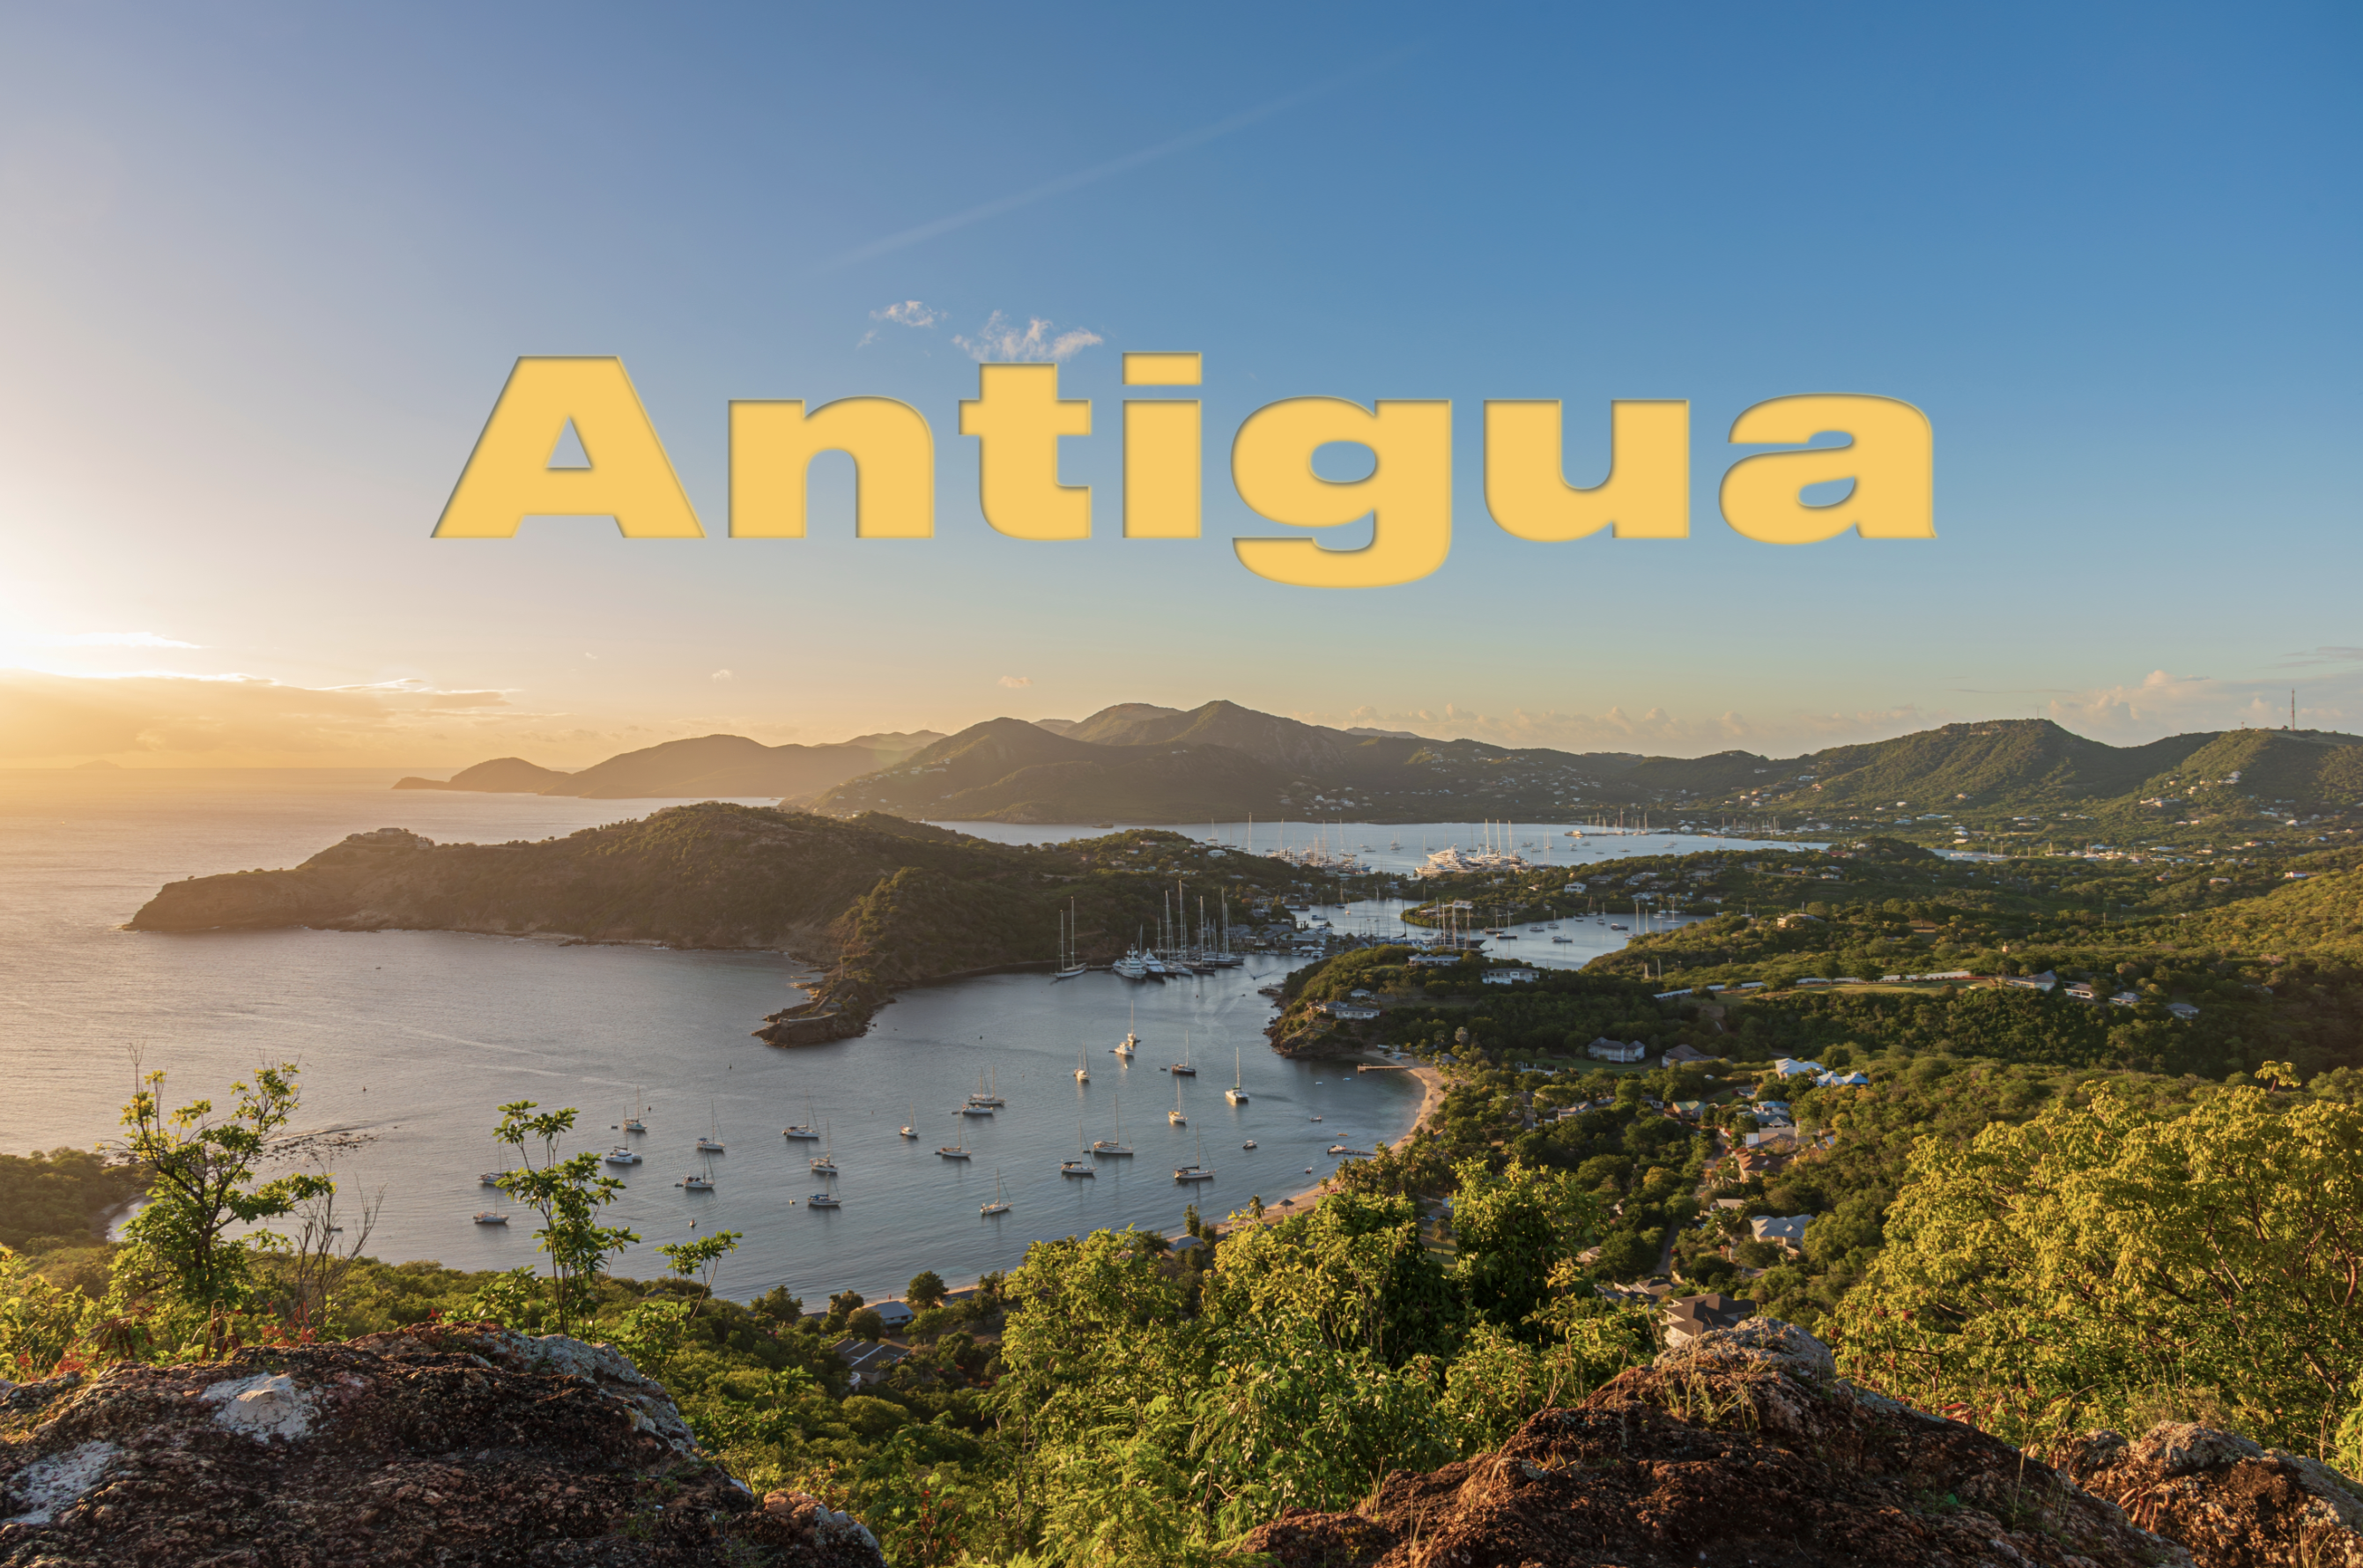 Antigua, The Land of 365 Beaches